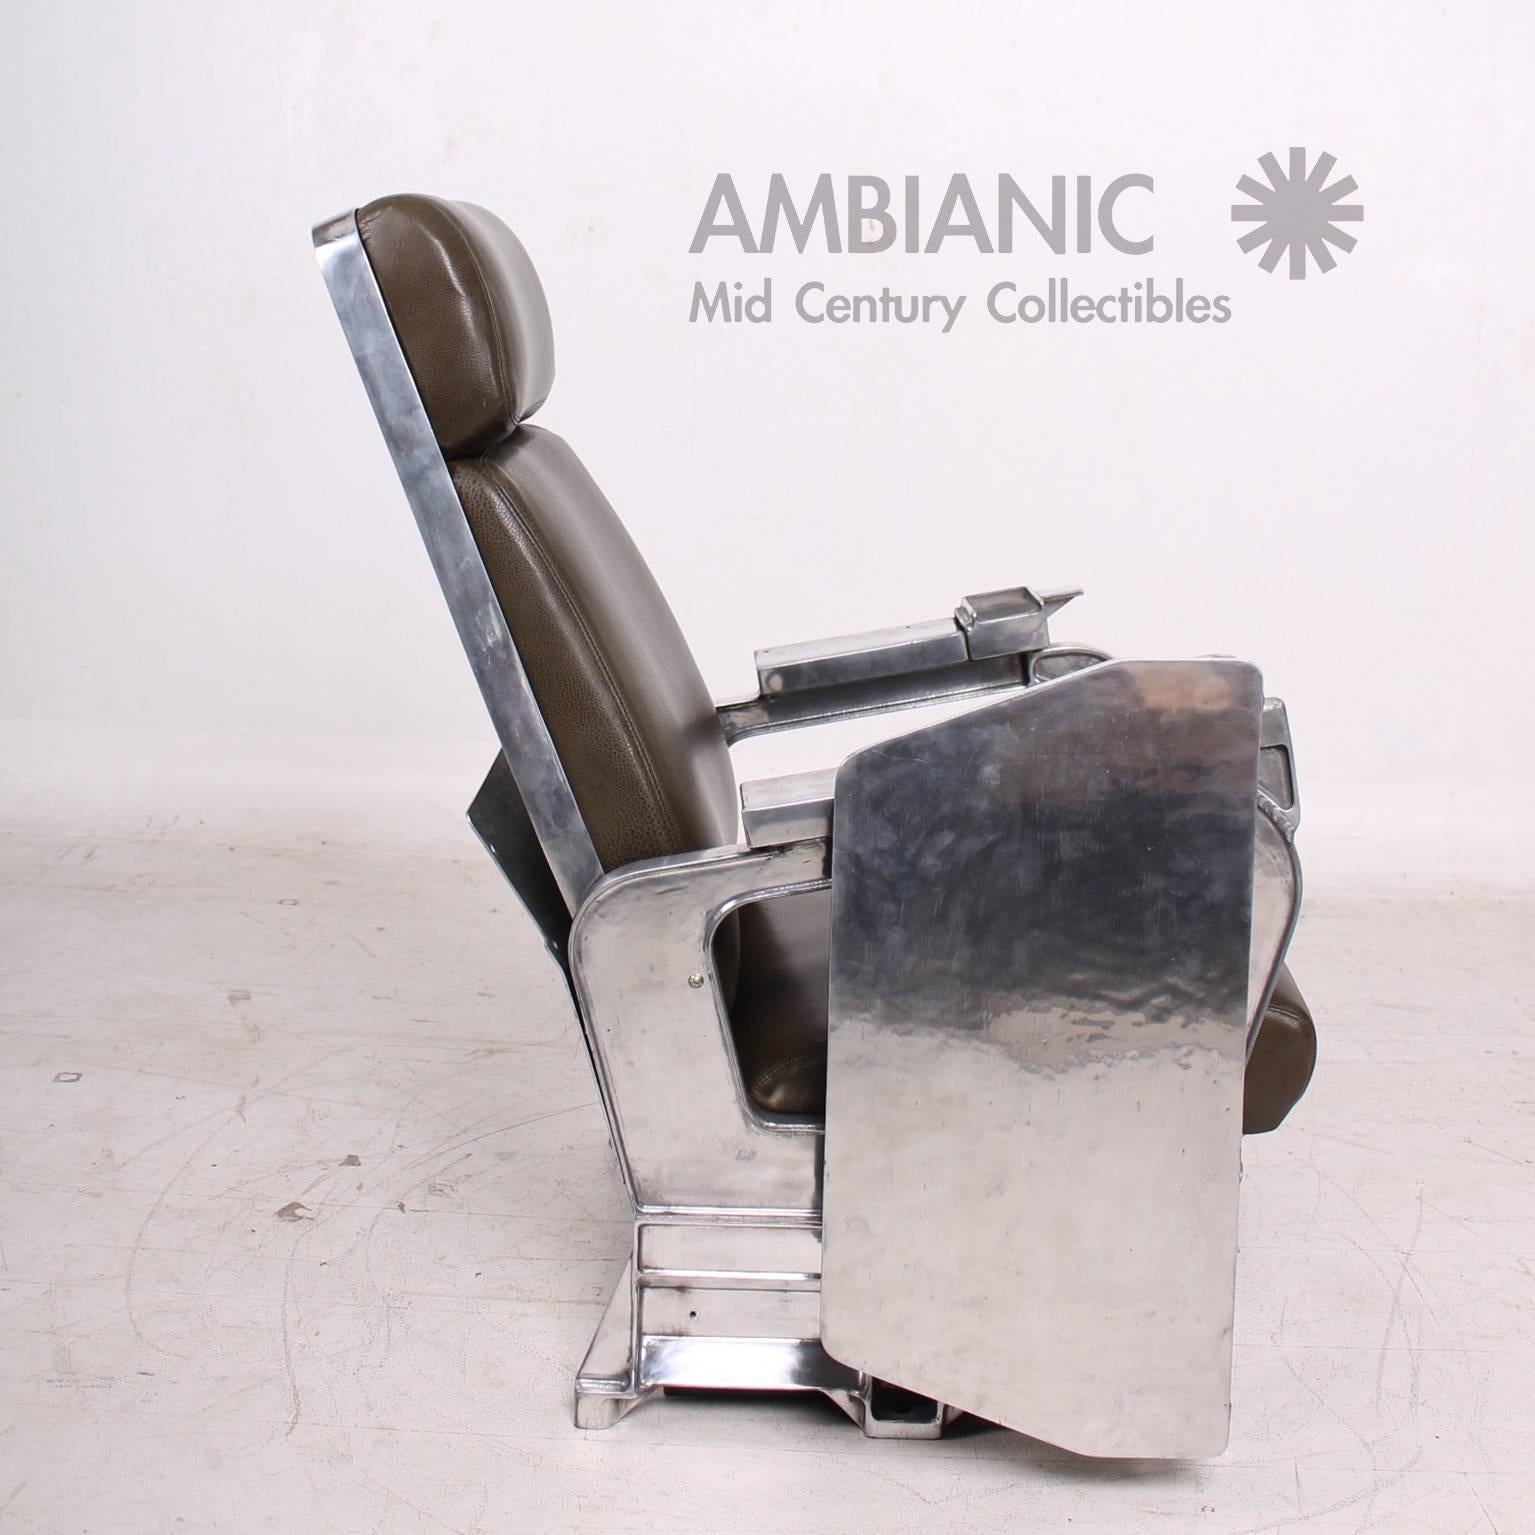 Mid-Century Modern Aluminum Airplane Chair 1